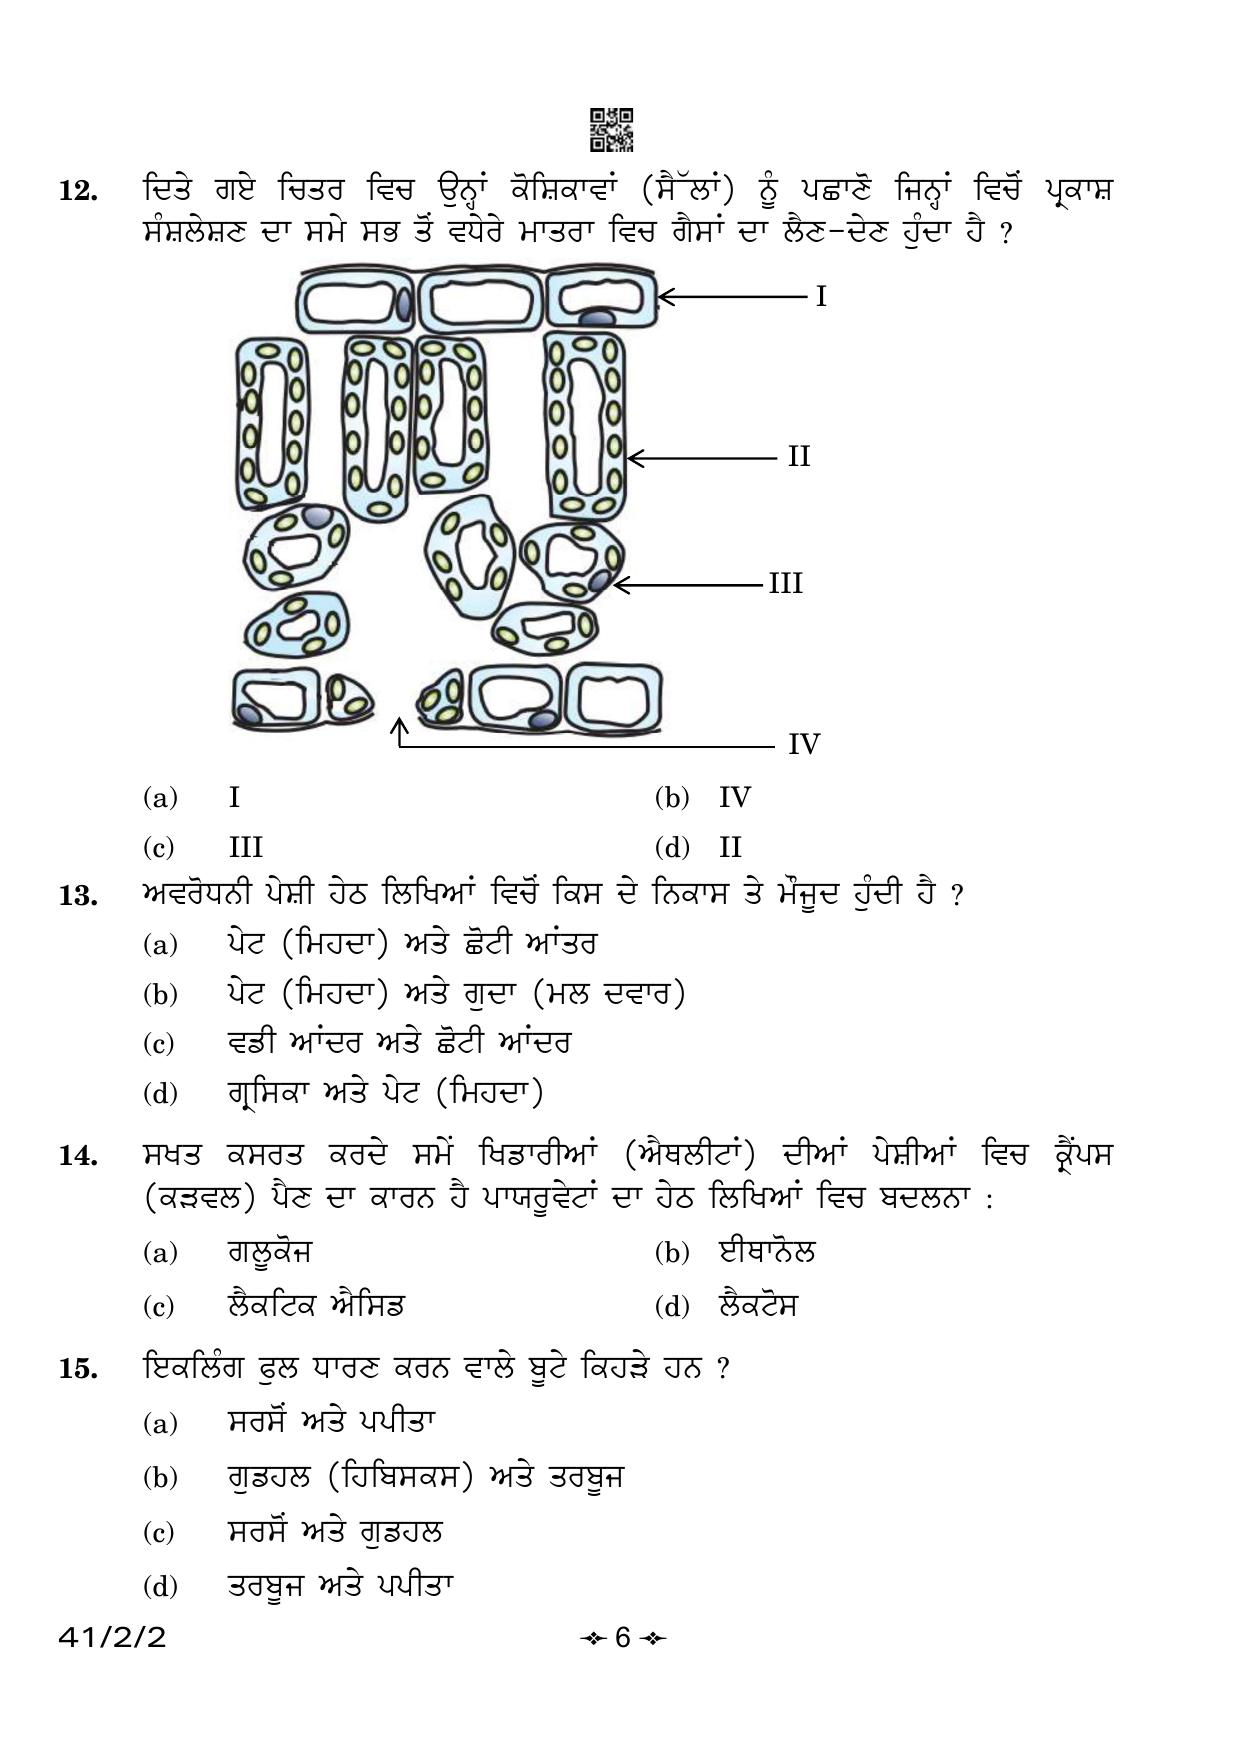 CBSE Class 10 41-2-2 Science Punjabi Version 2023 Question Paper - Page 6